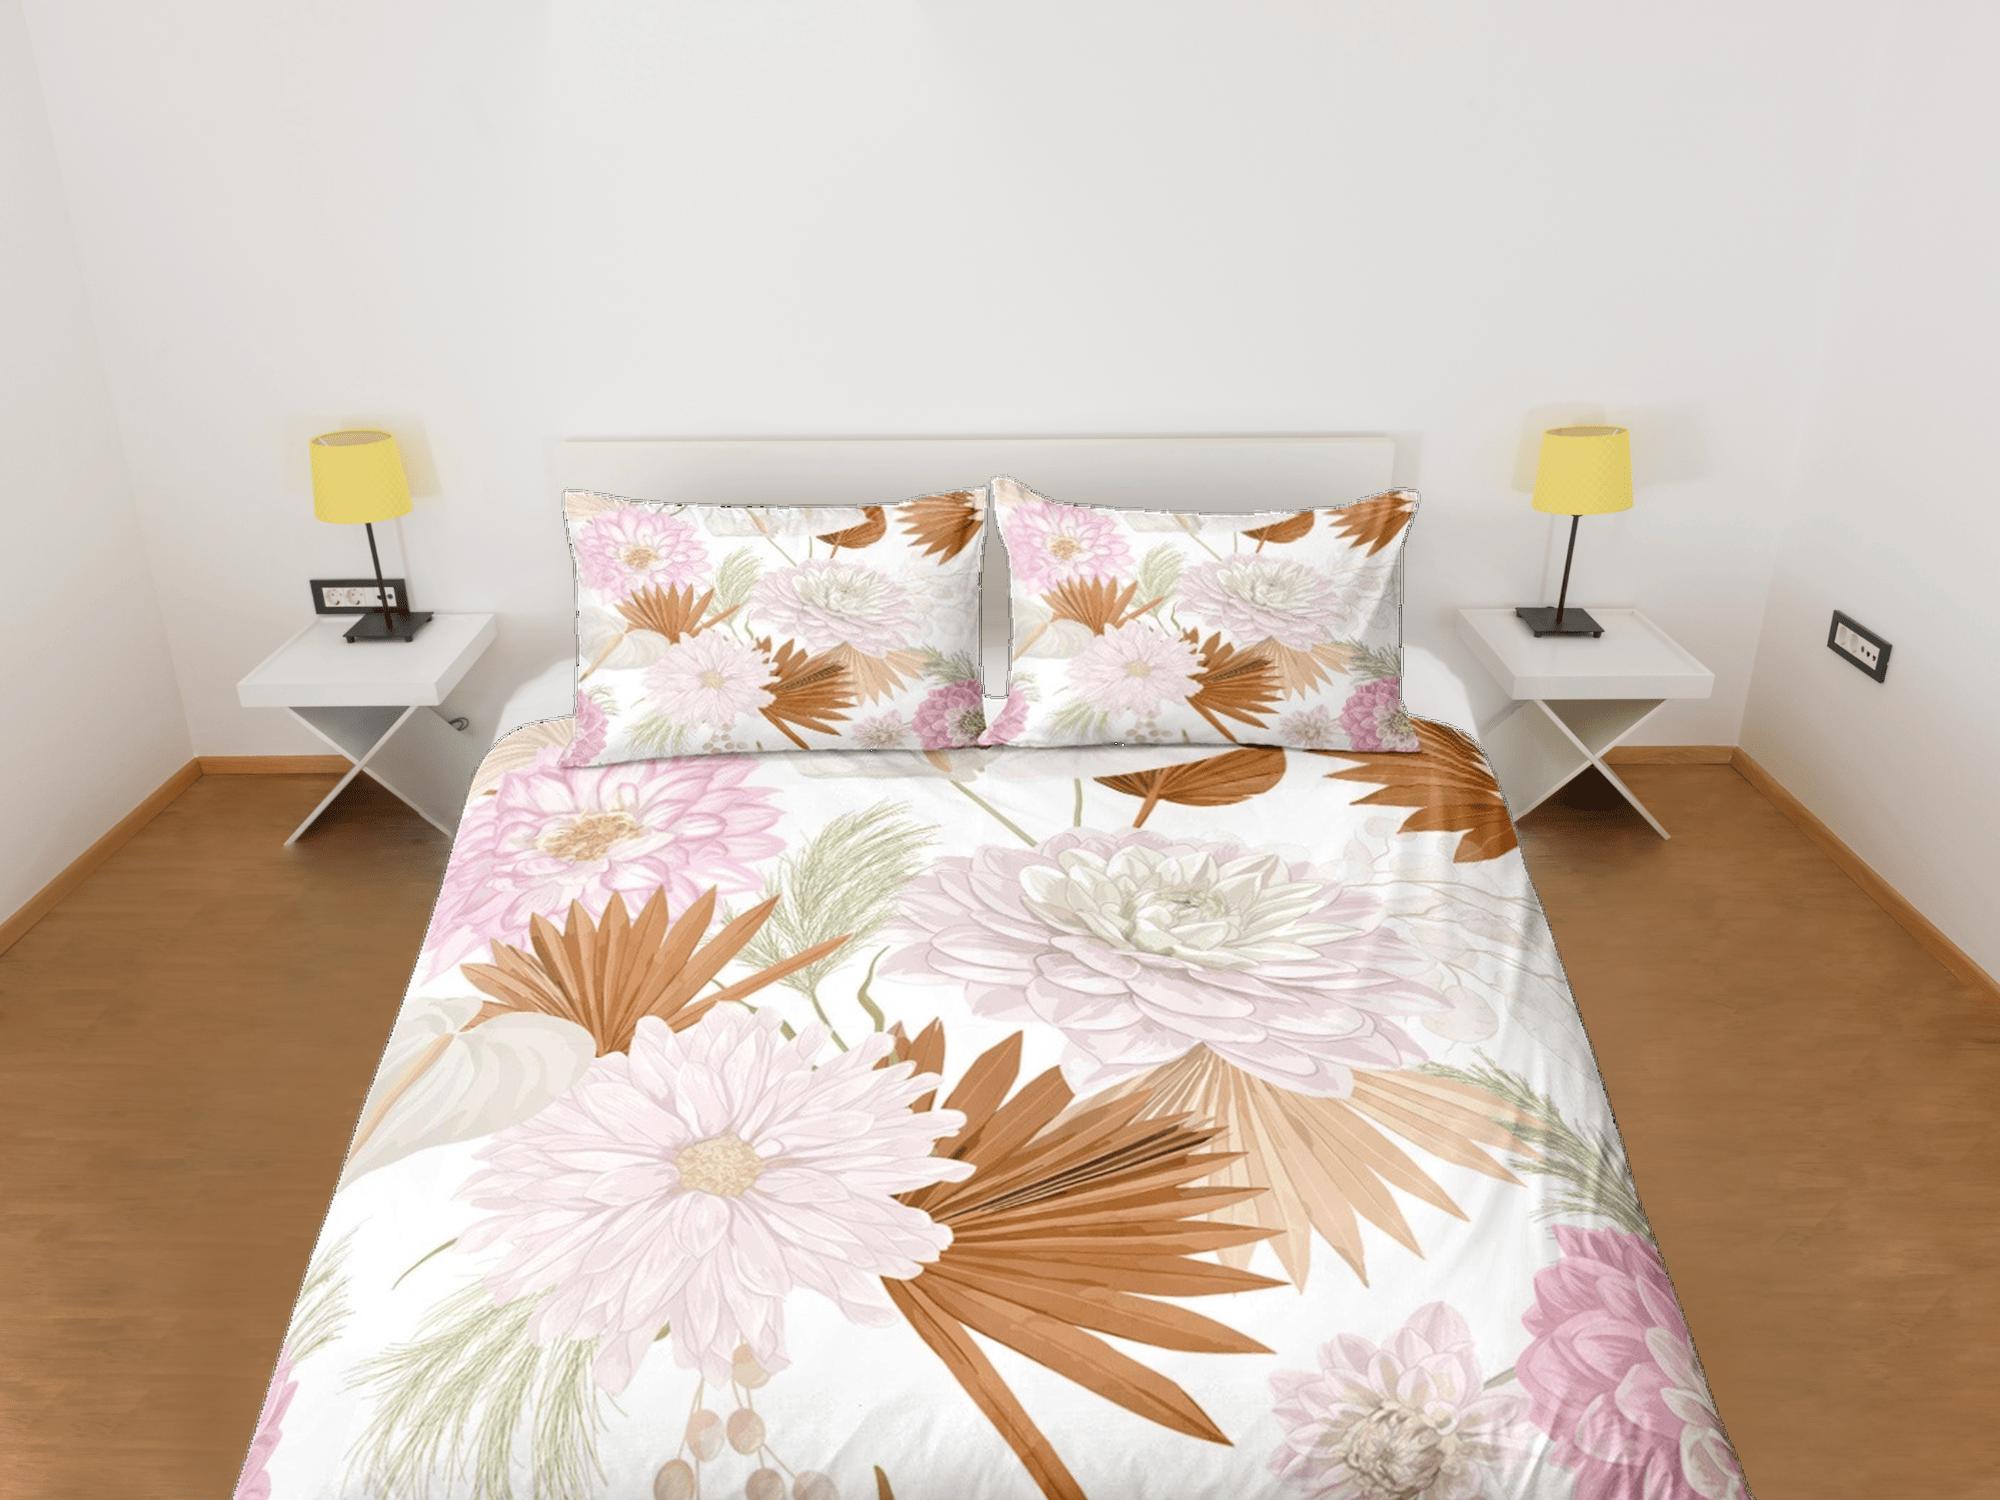 daintyduvet Bohemian pink floral duvet cover colorful bedding, teen girl bedroom, baby girl crib bedding boho maximalist bedspread aesthetic bedding